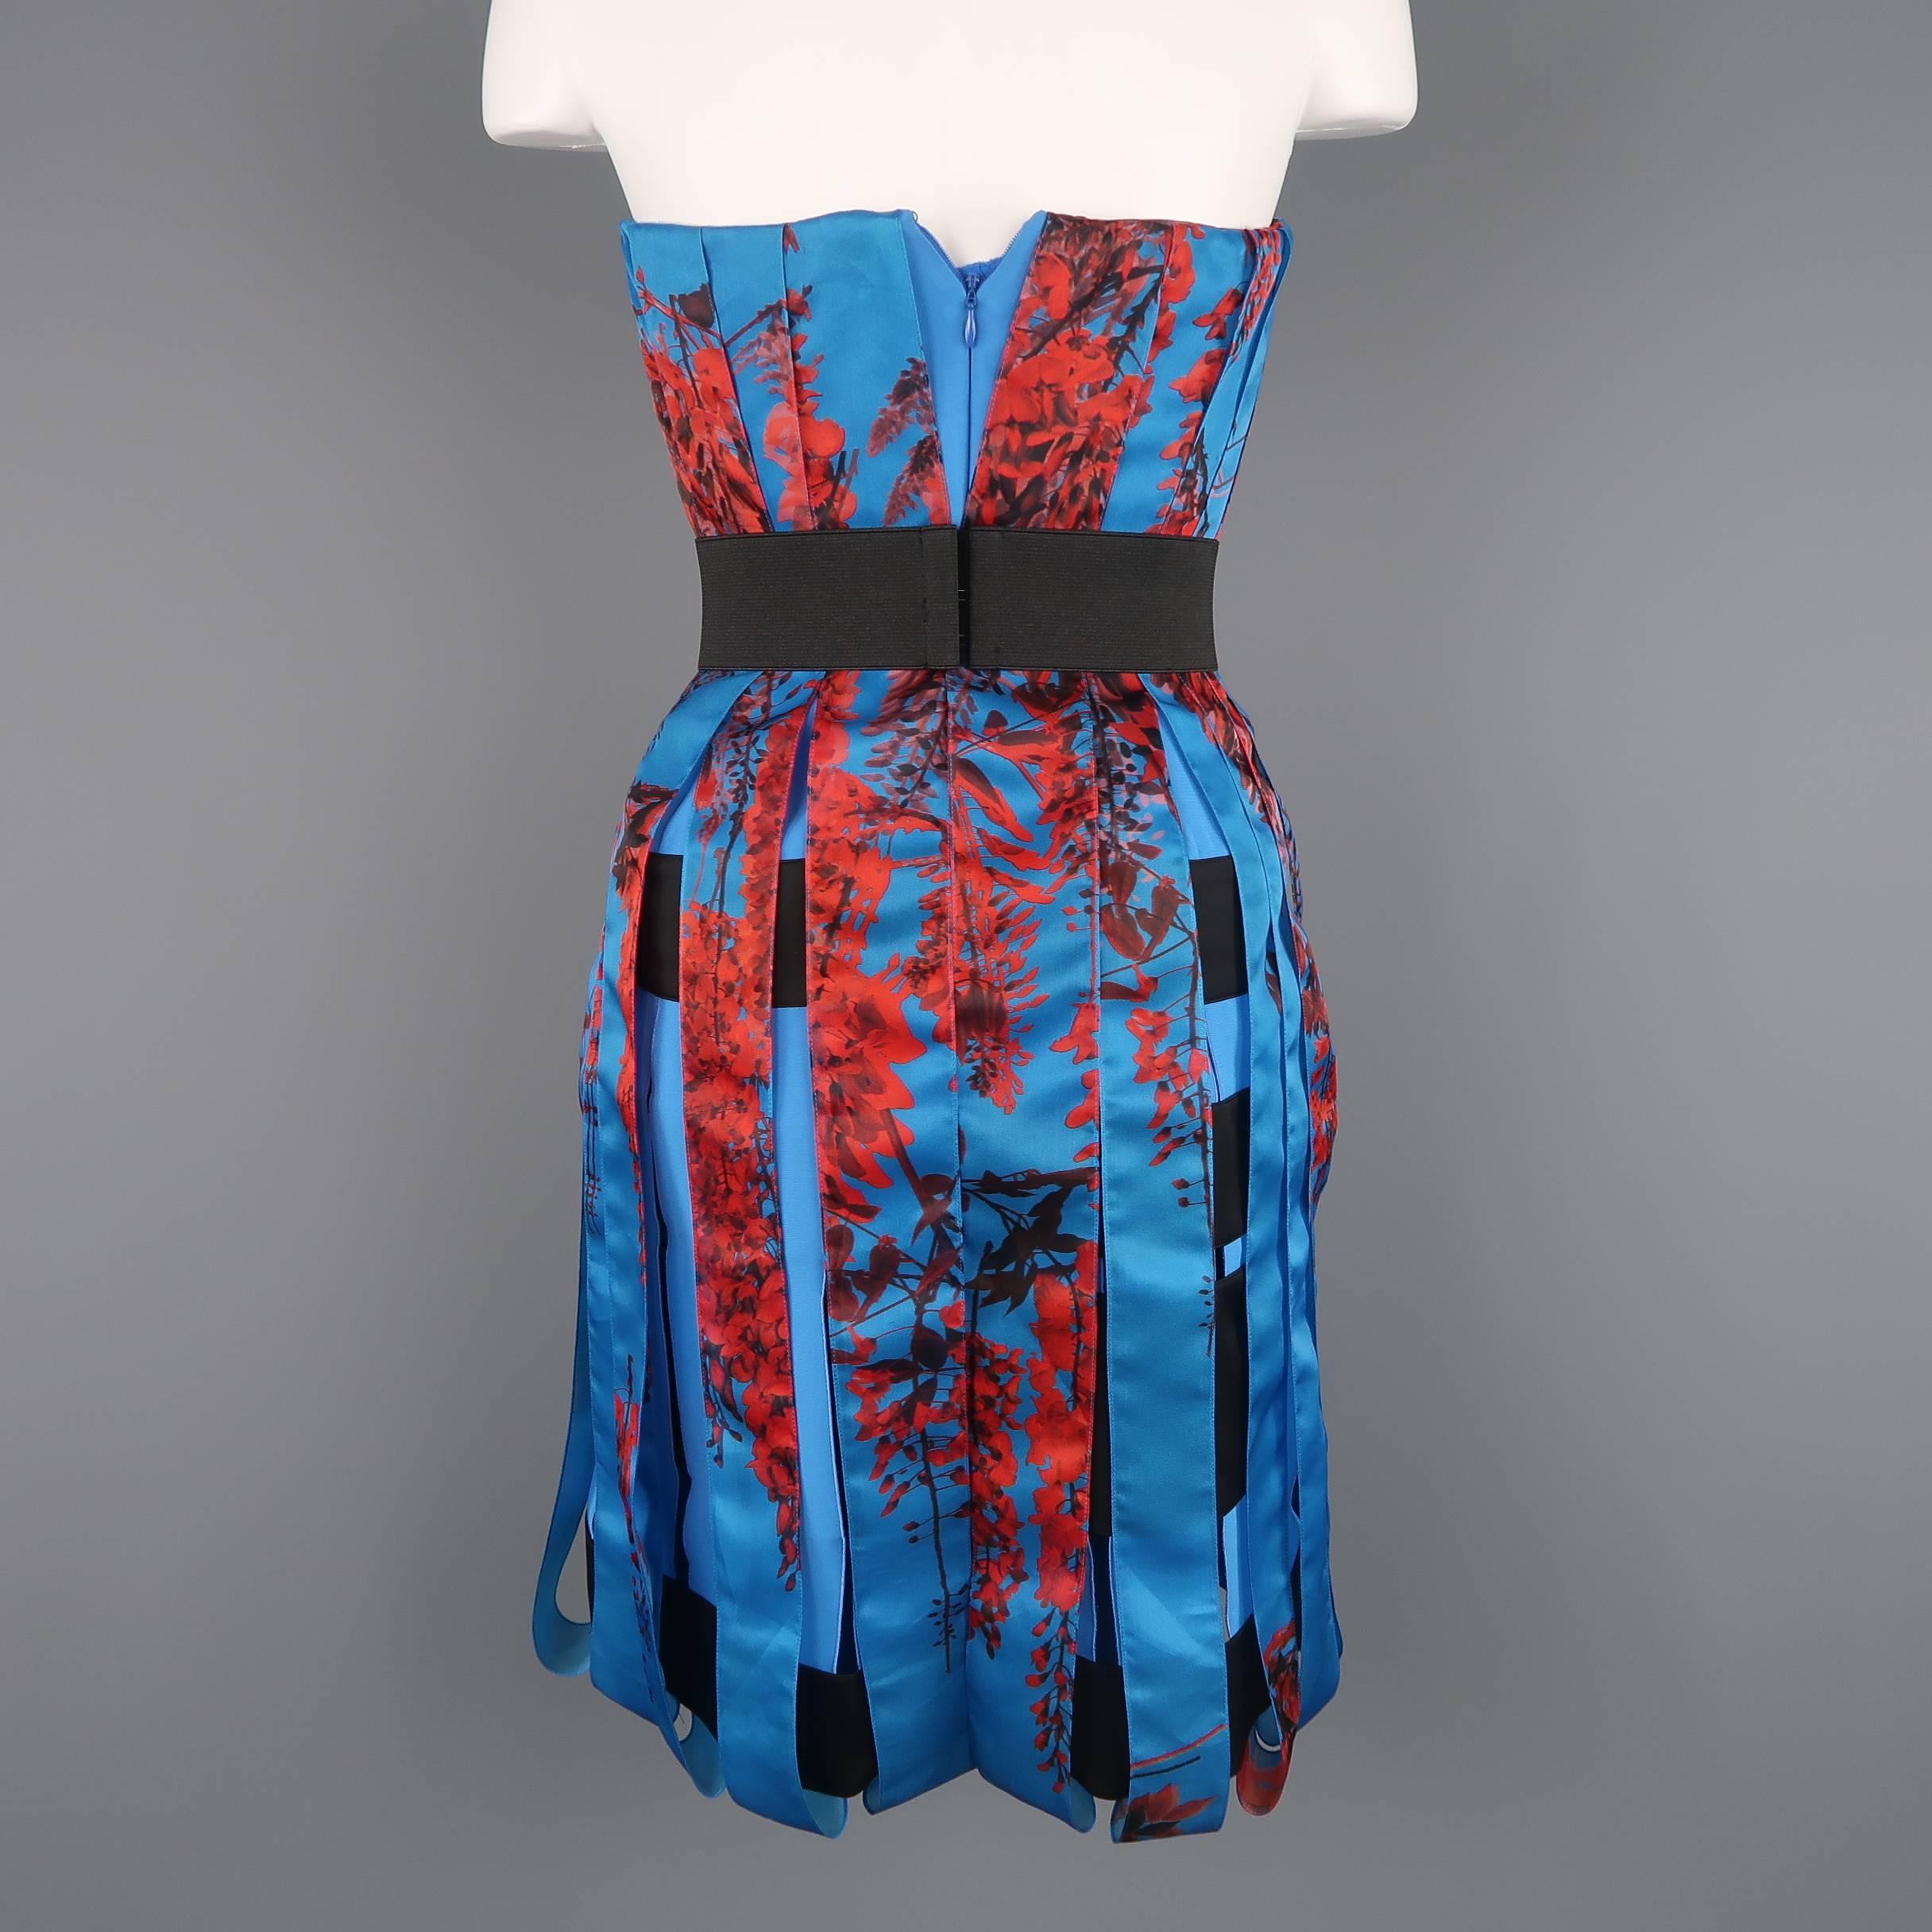 Christian Dior Dress - Spring 2014 Runway - Blue, Red, Floral, Silk, Cocktail 2